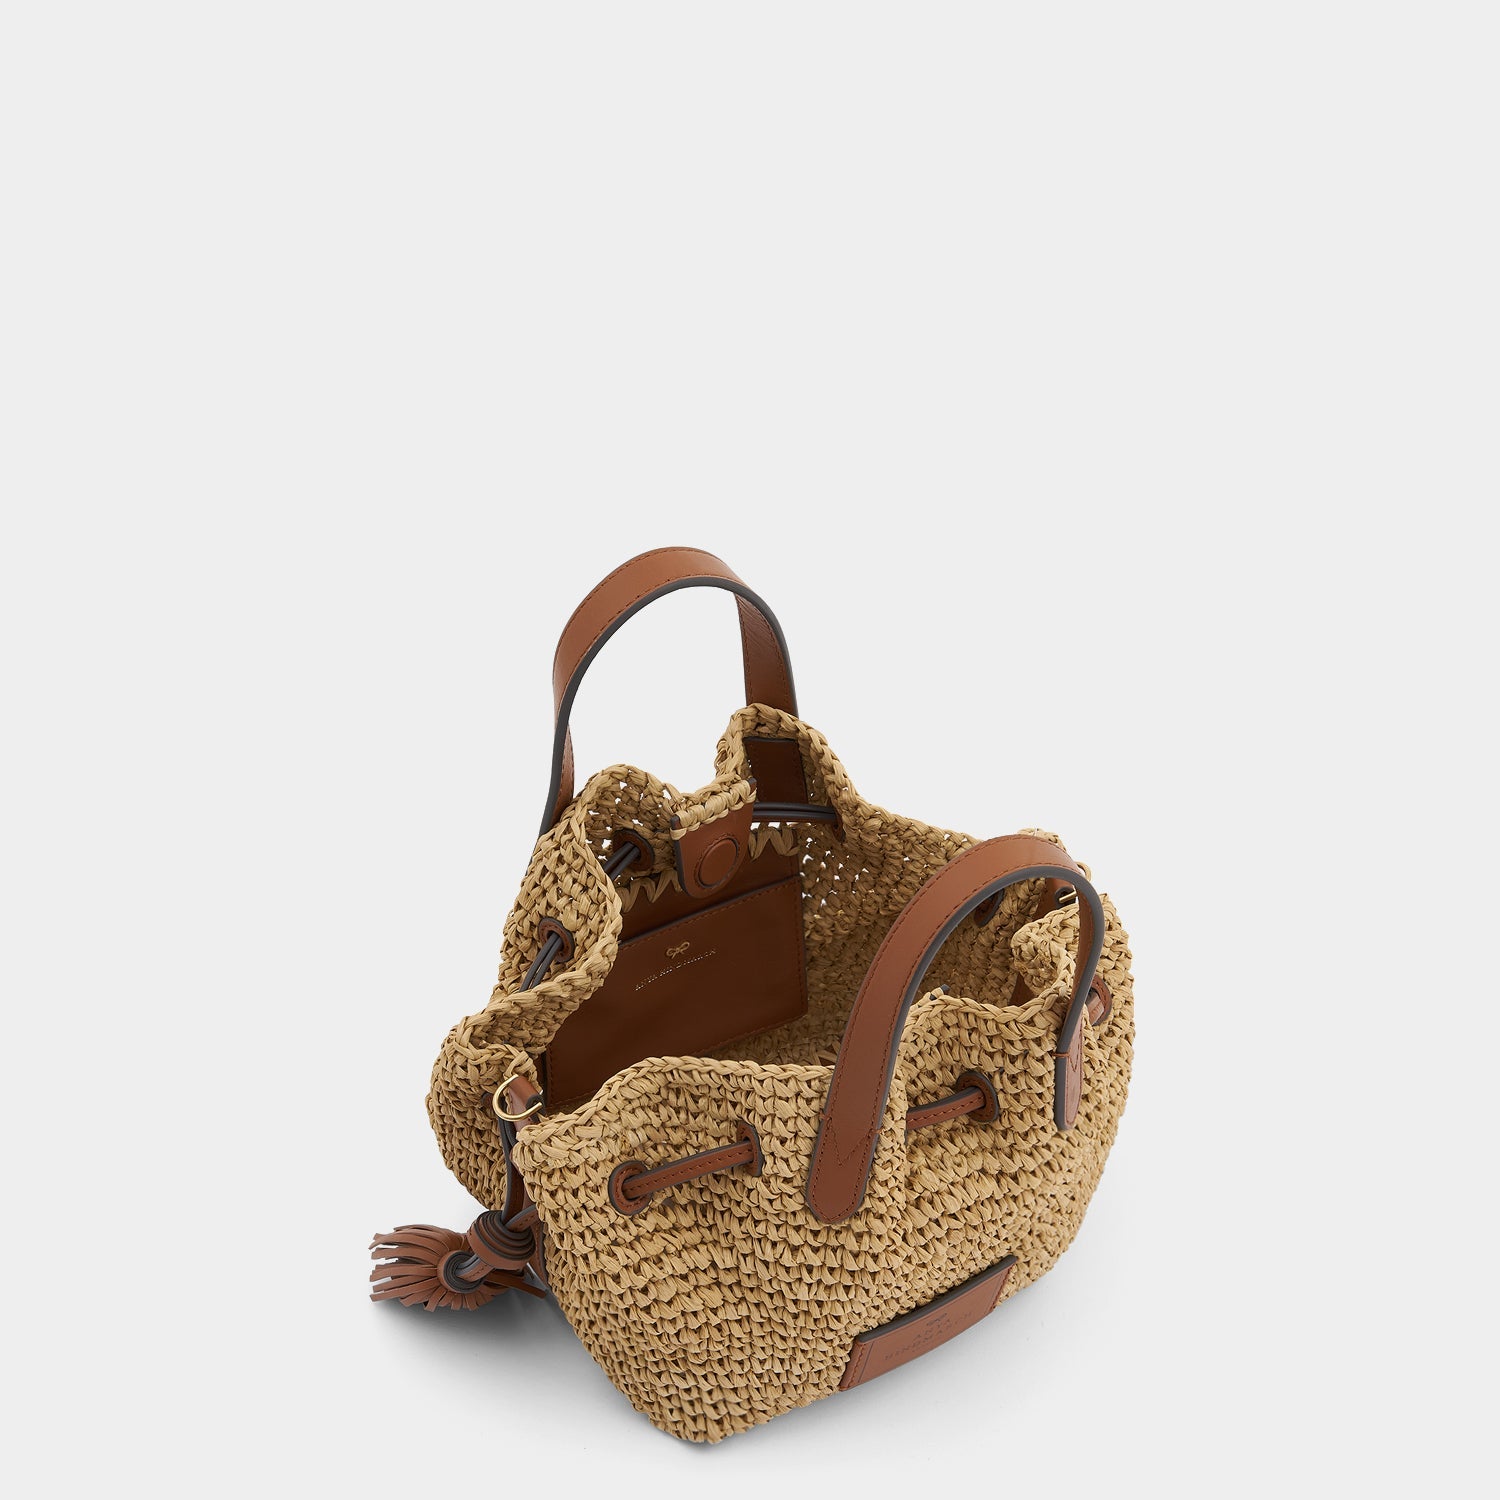 Raffia mini tote bag with leather handles